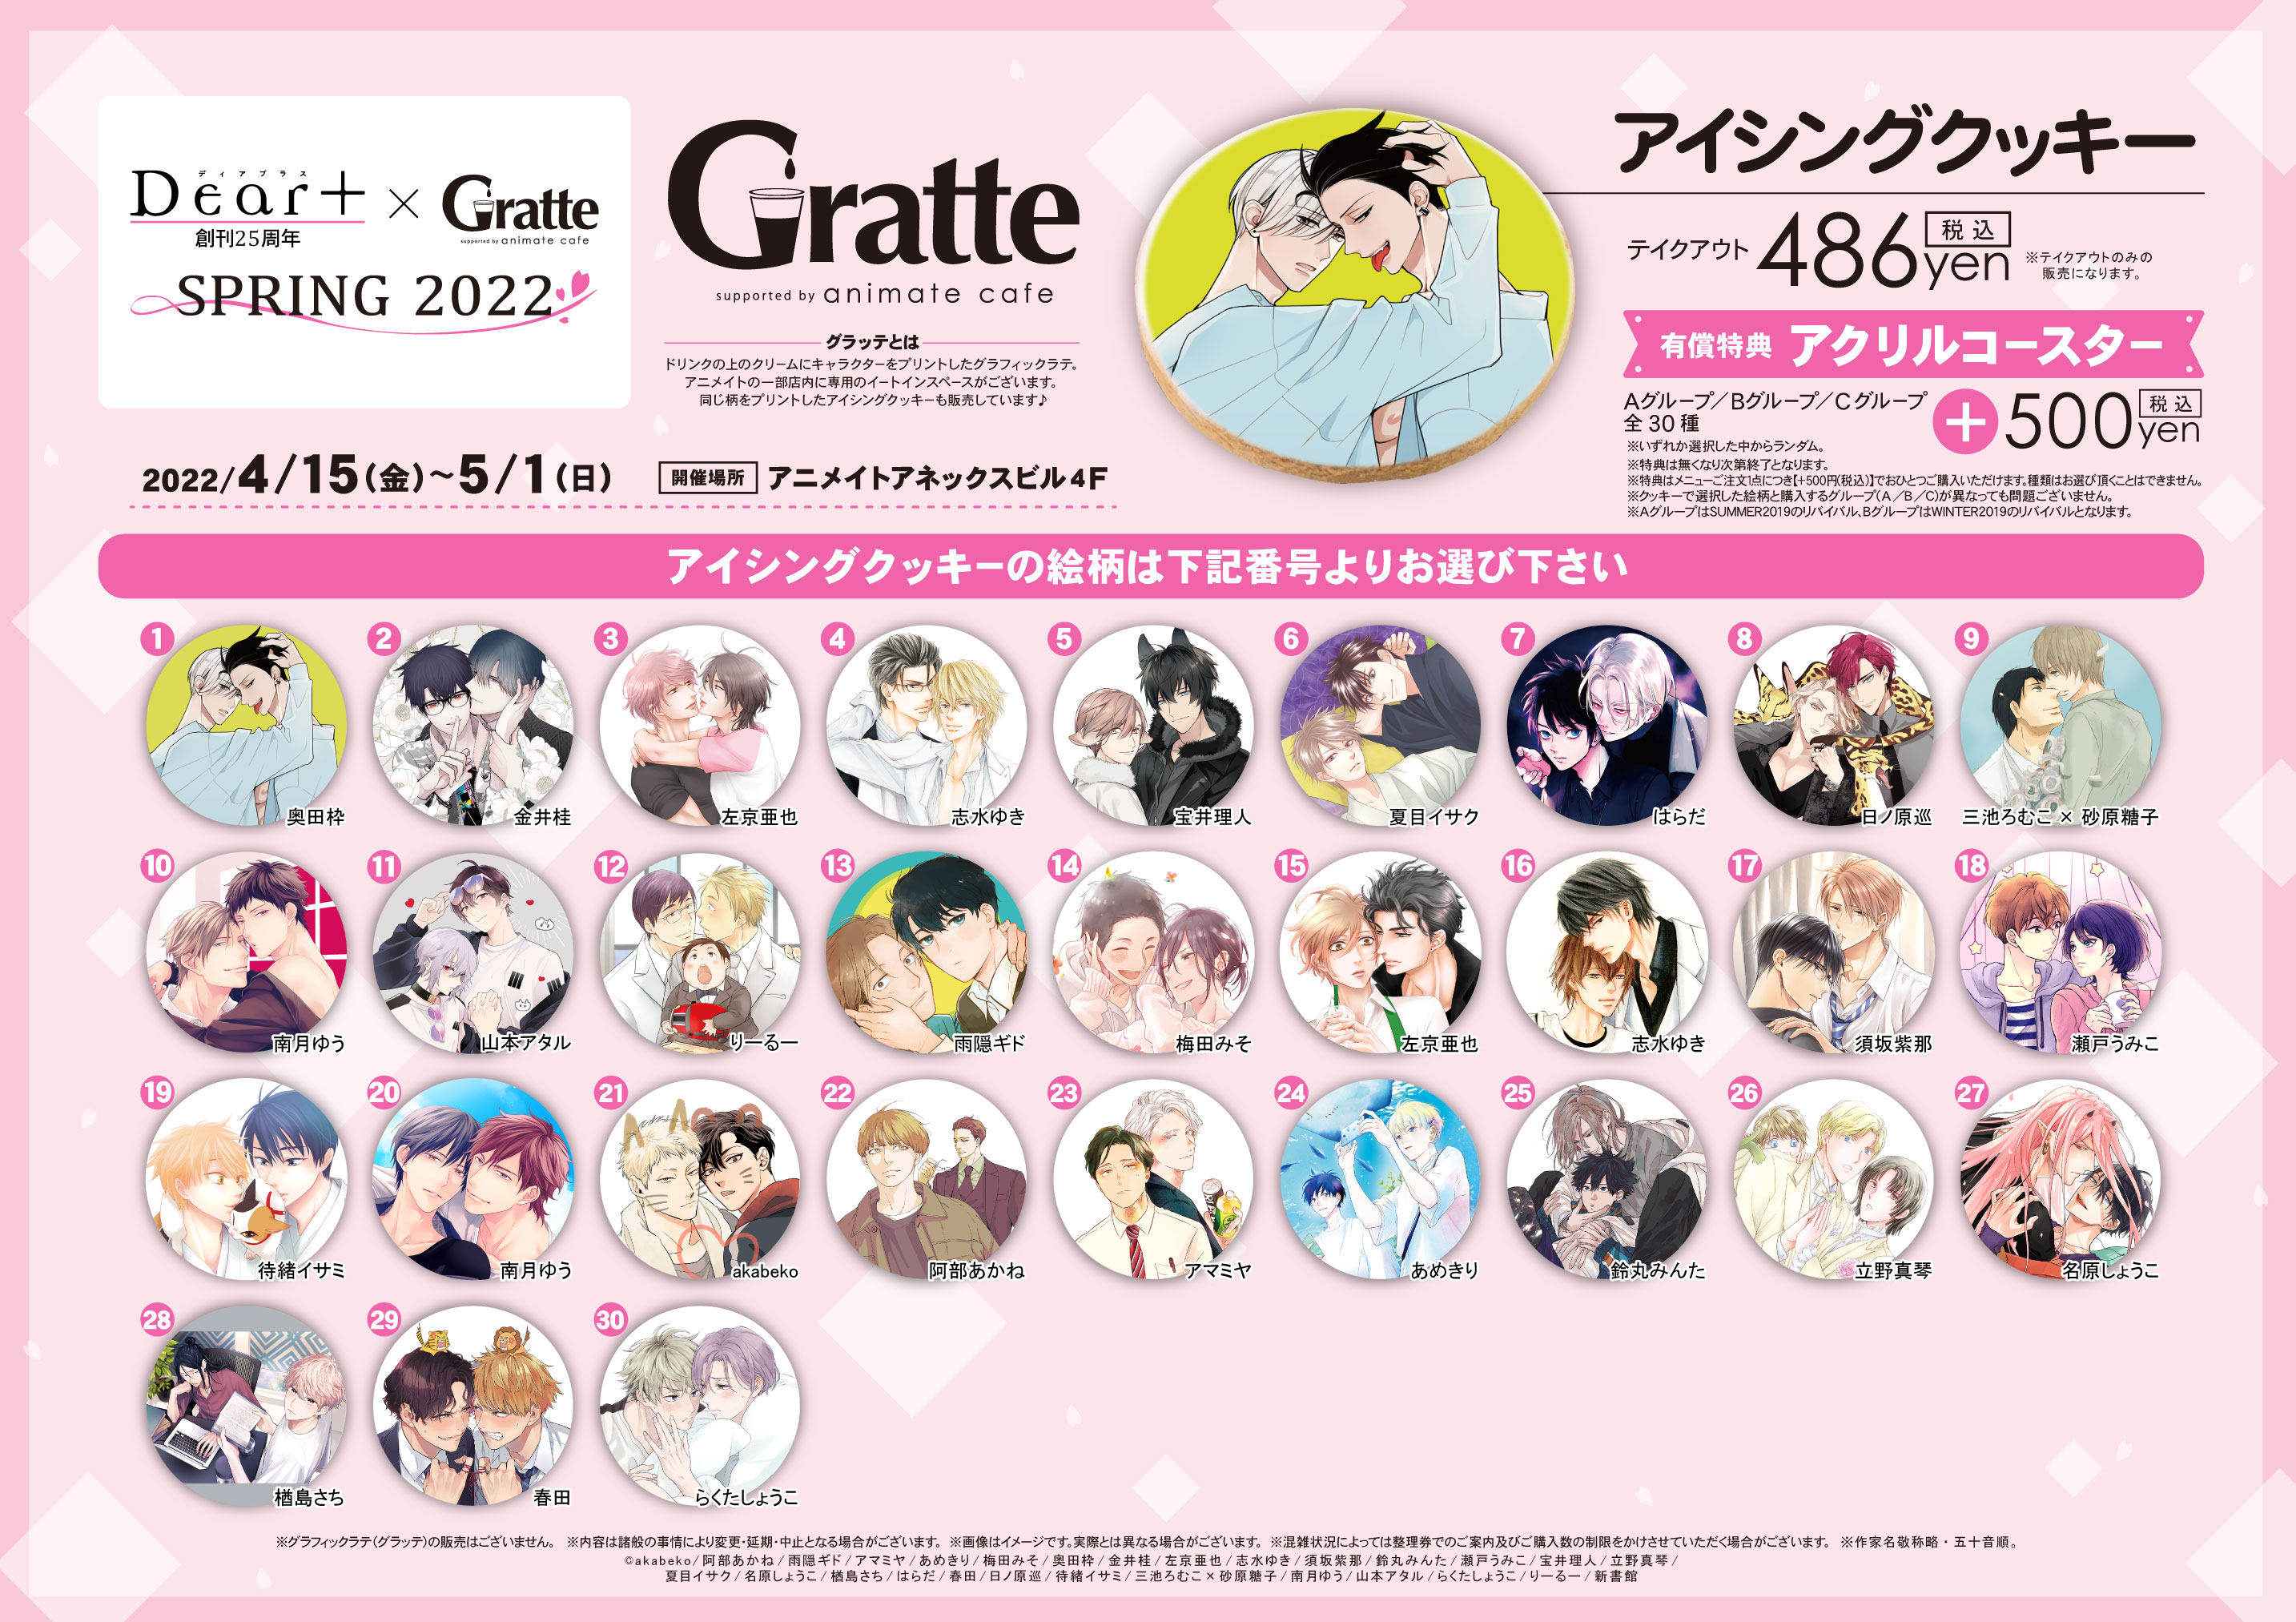 Dear+25周年×Gratte SPRING 2022のGratte - アニメイト